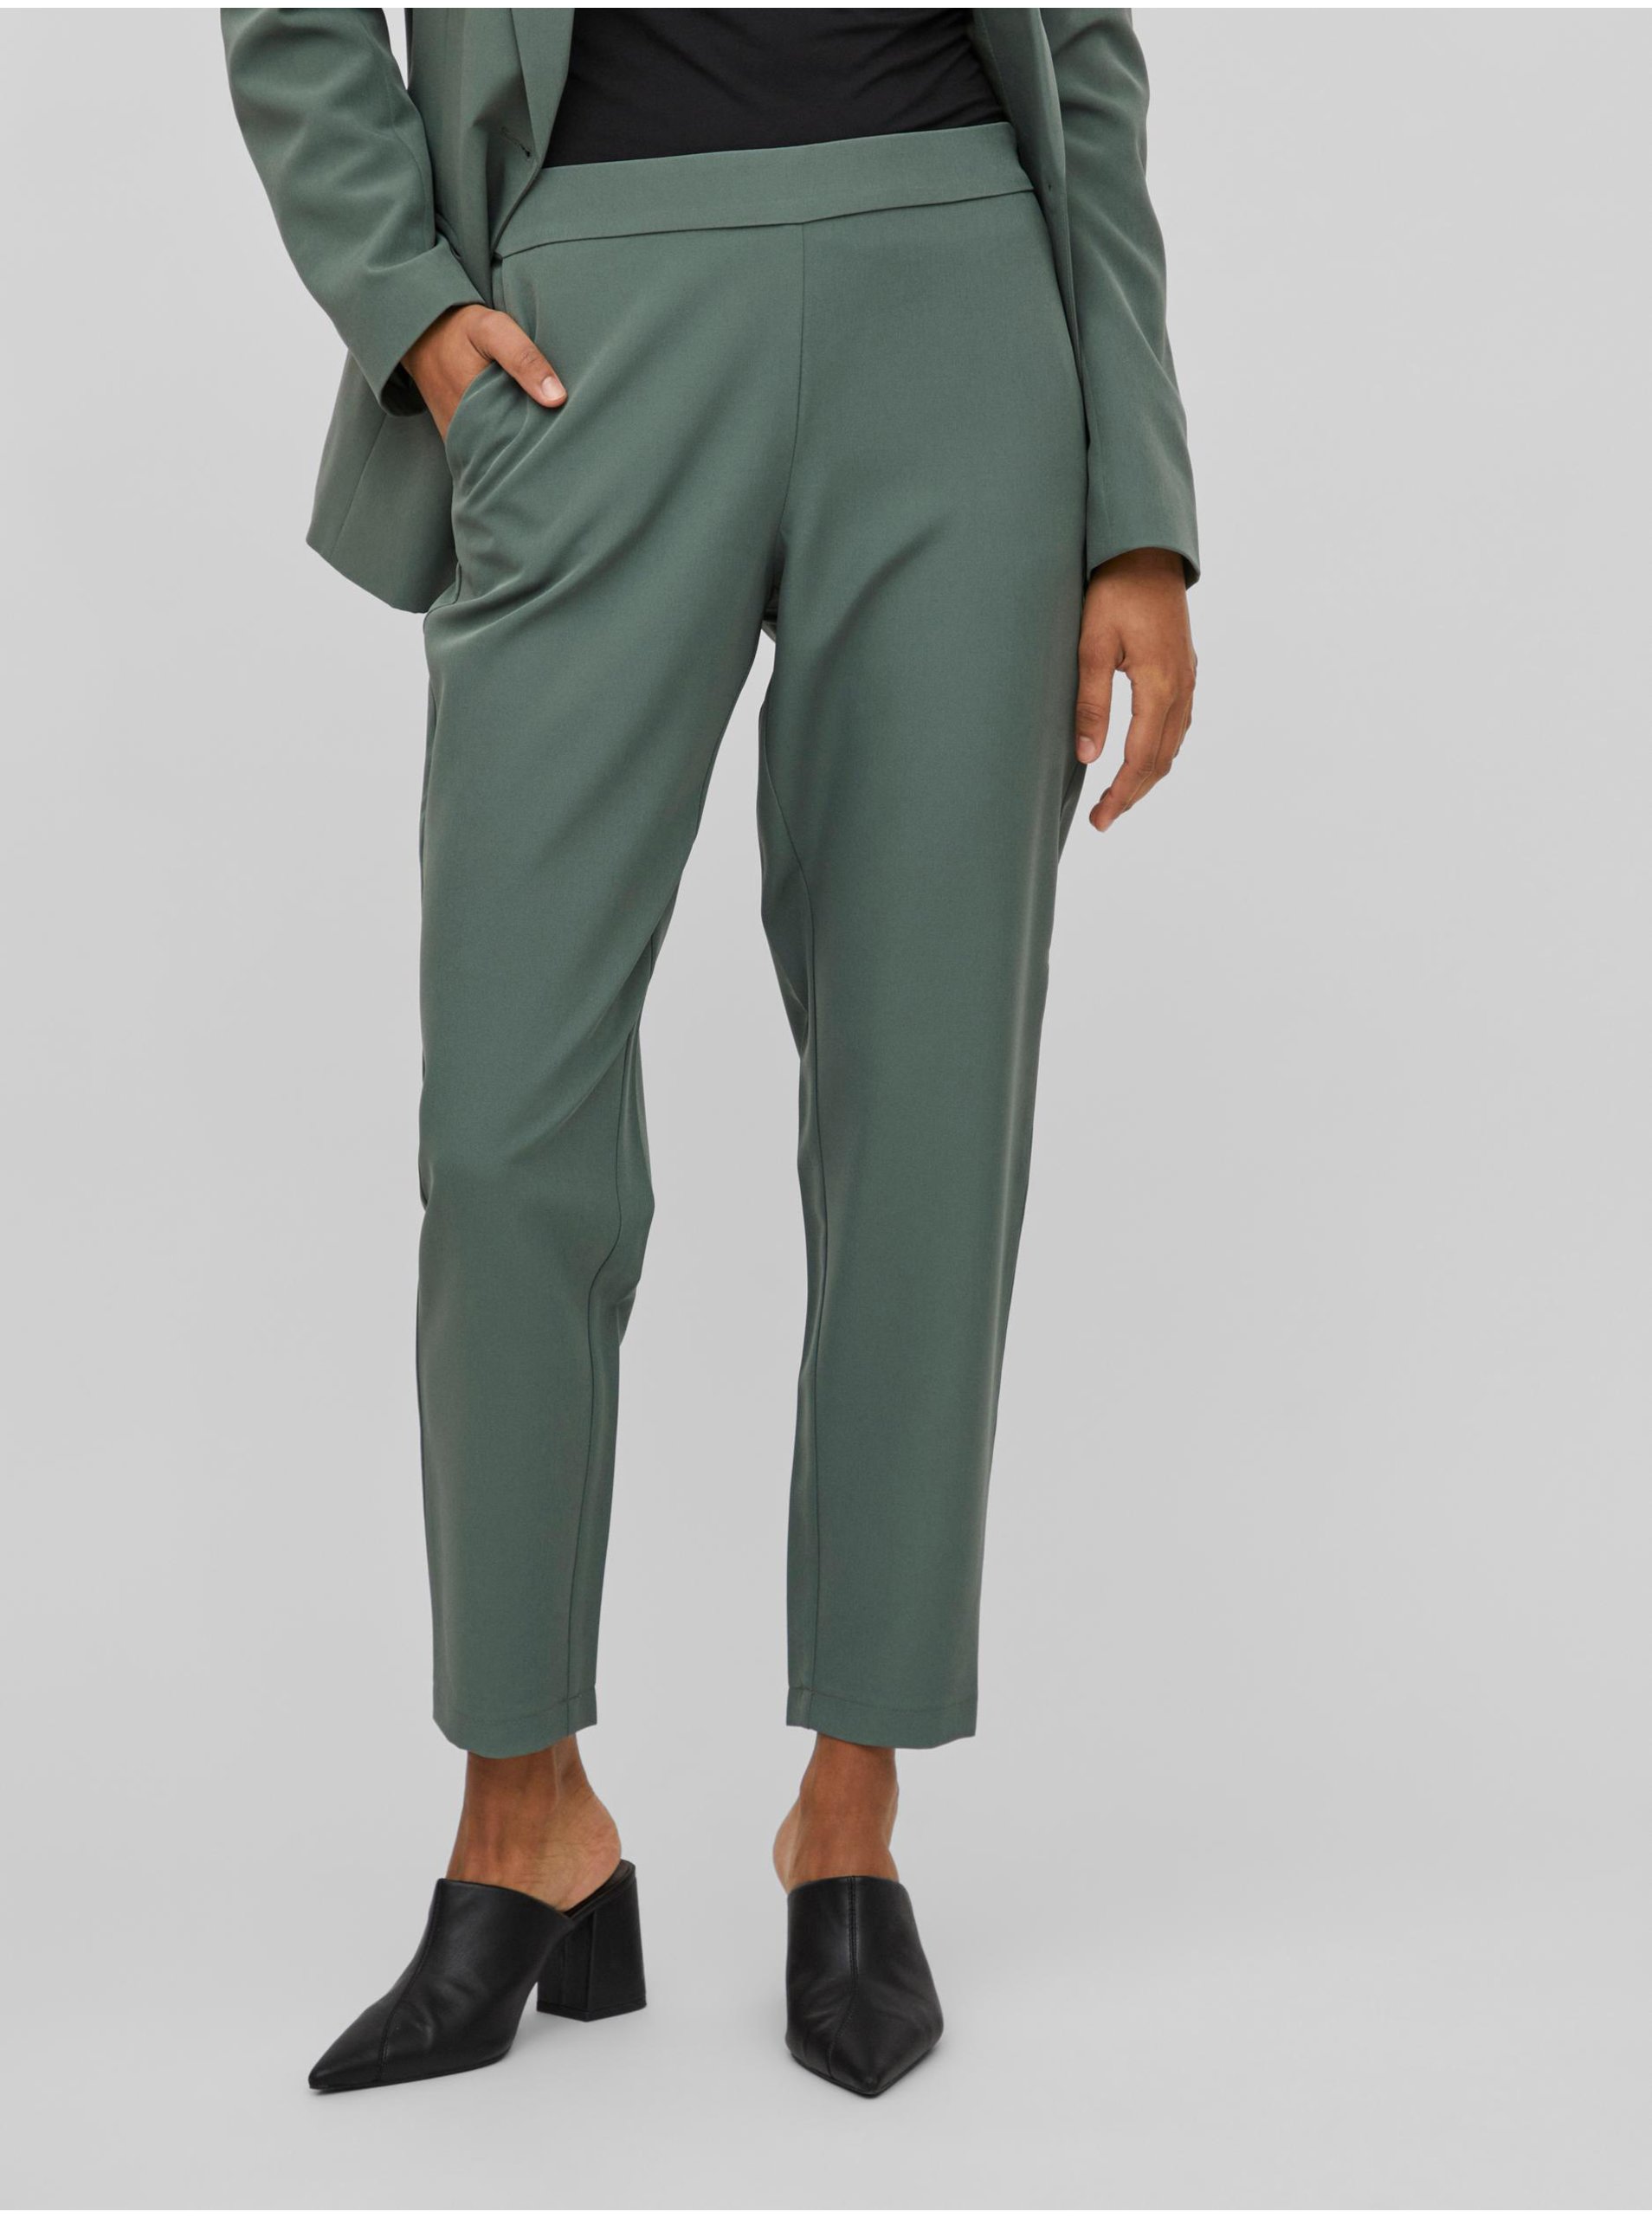 Lacno Elegantné nohavice pre ženy VILA - zelená